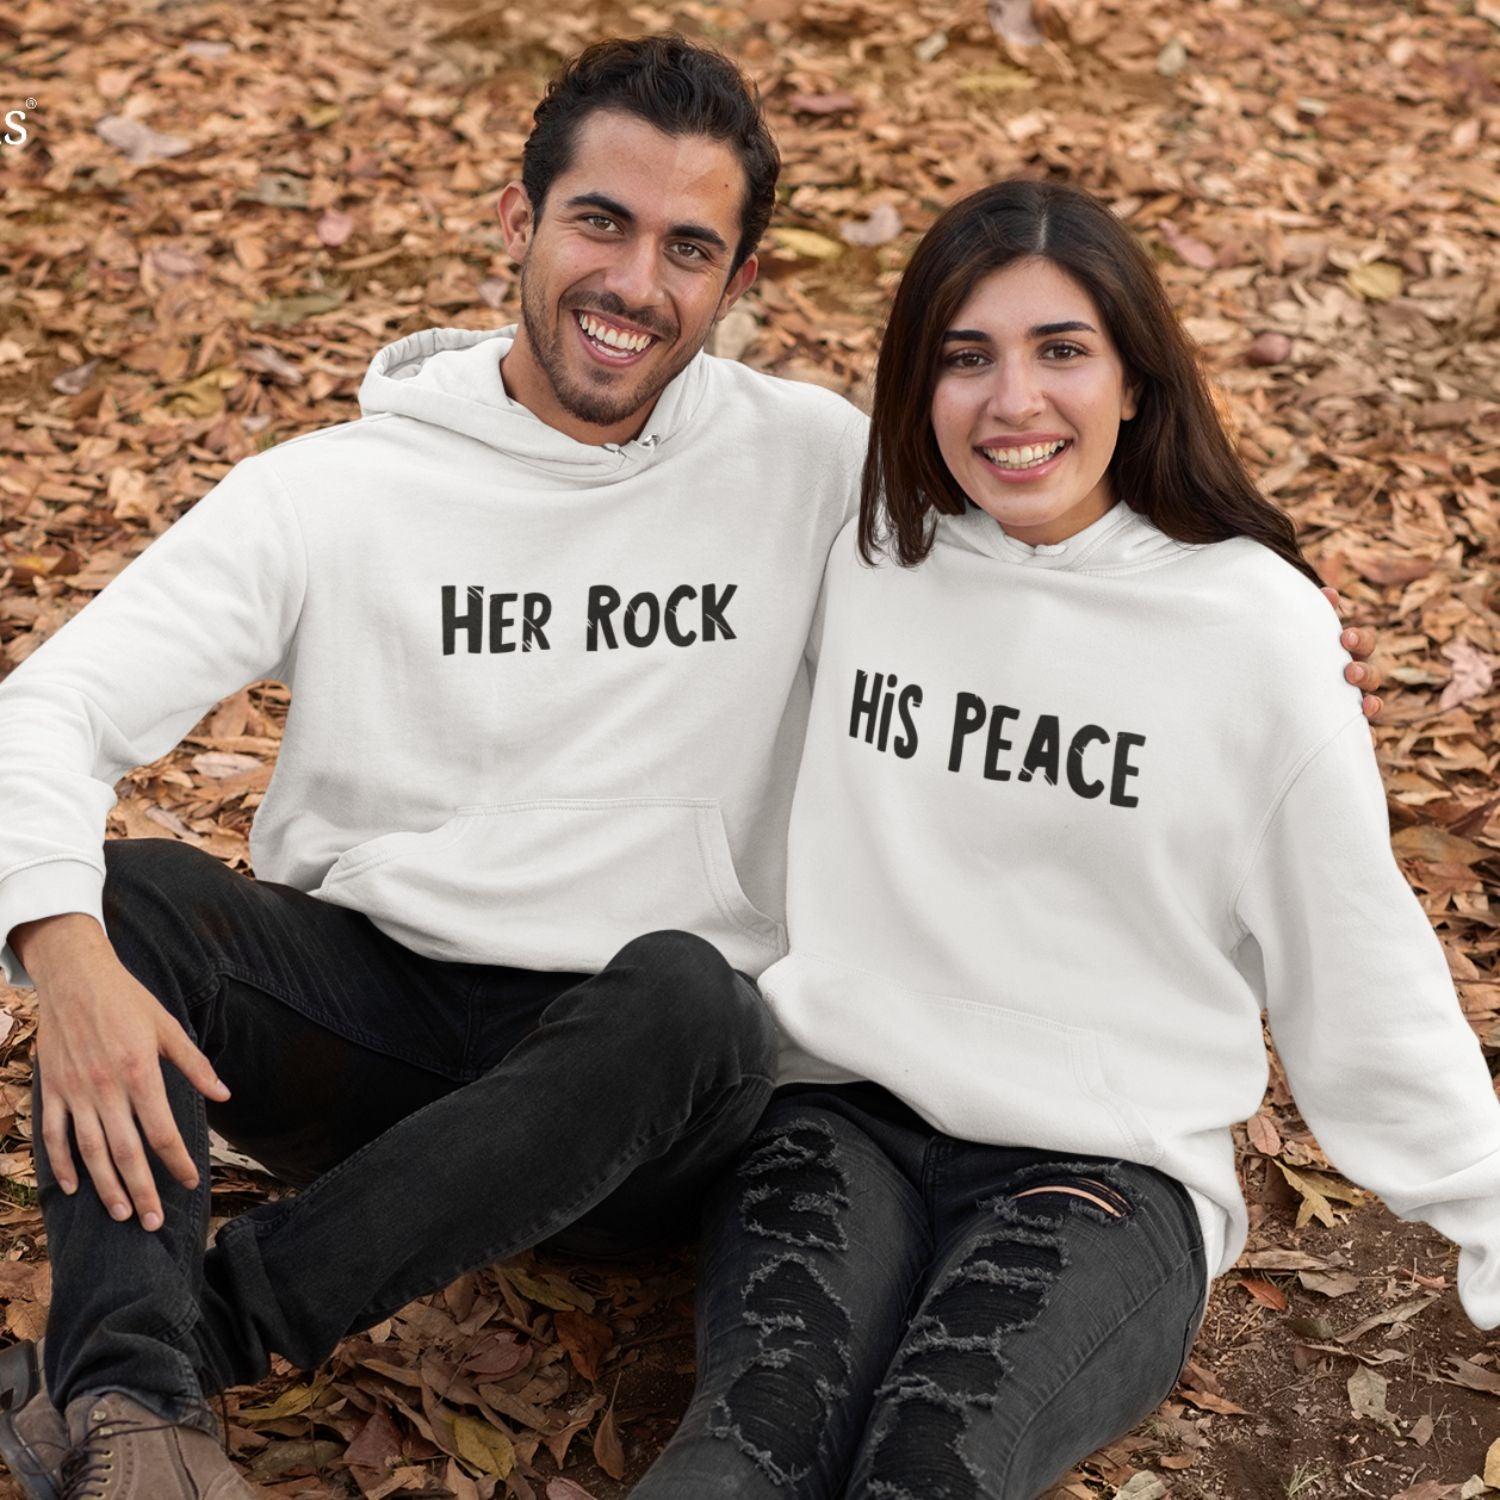 His And Her Sweatshirts